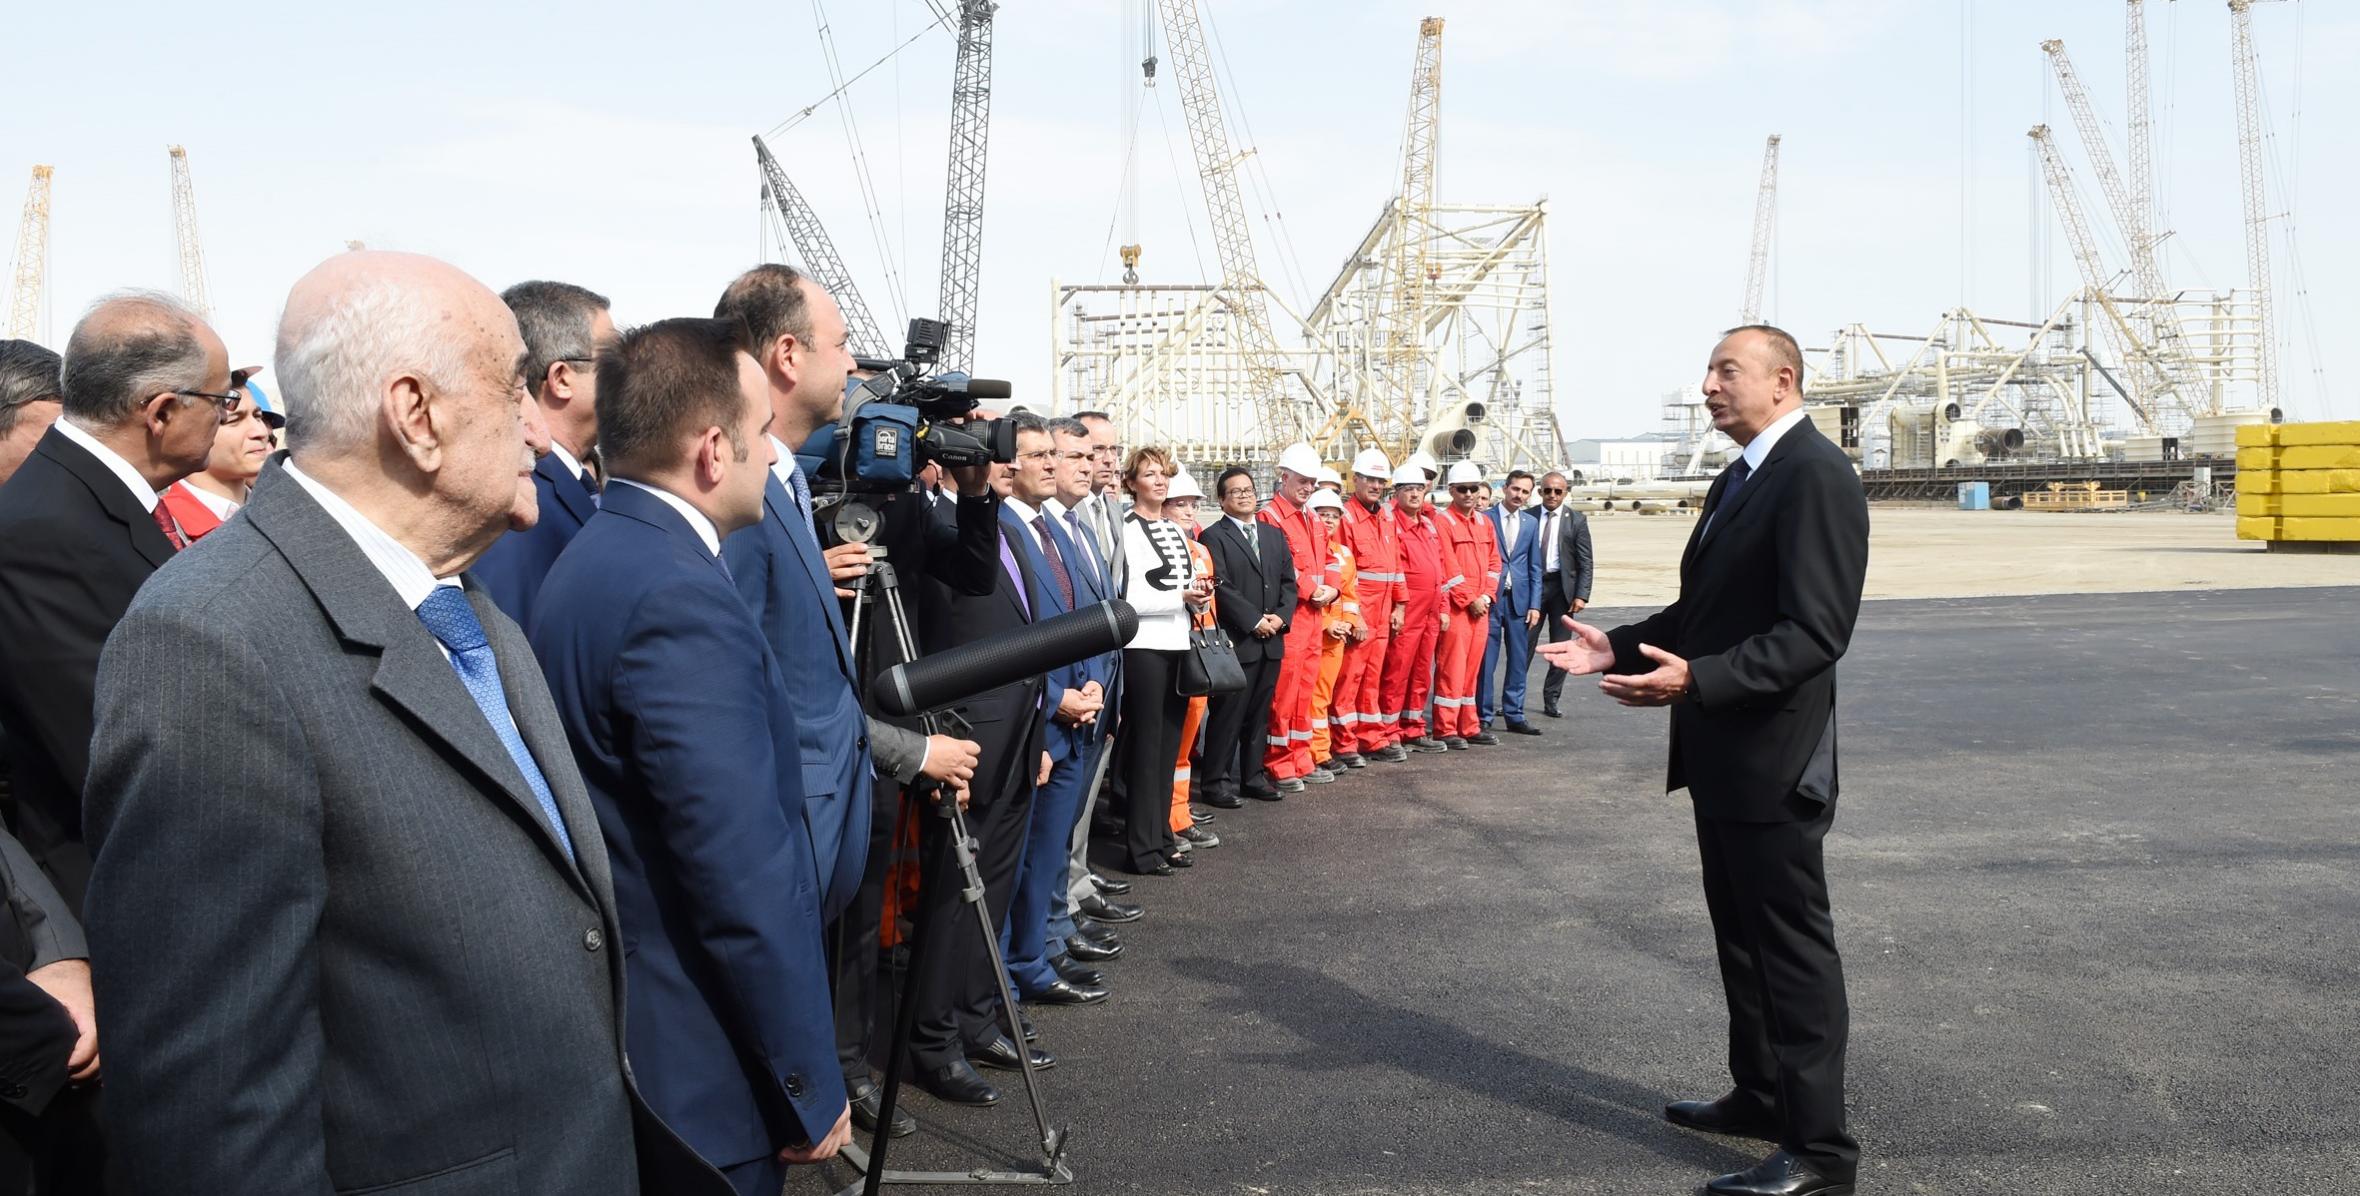 Speech by Ilham Aliyev at the Shah Deniz 2 platform jacket sail away event